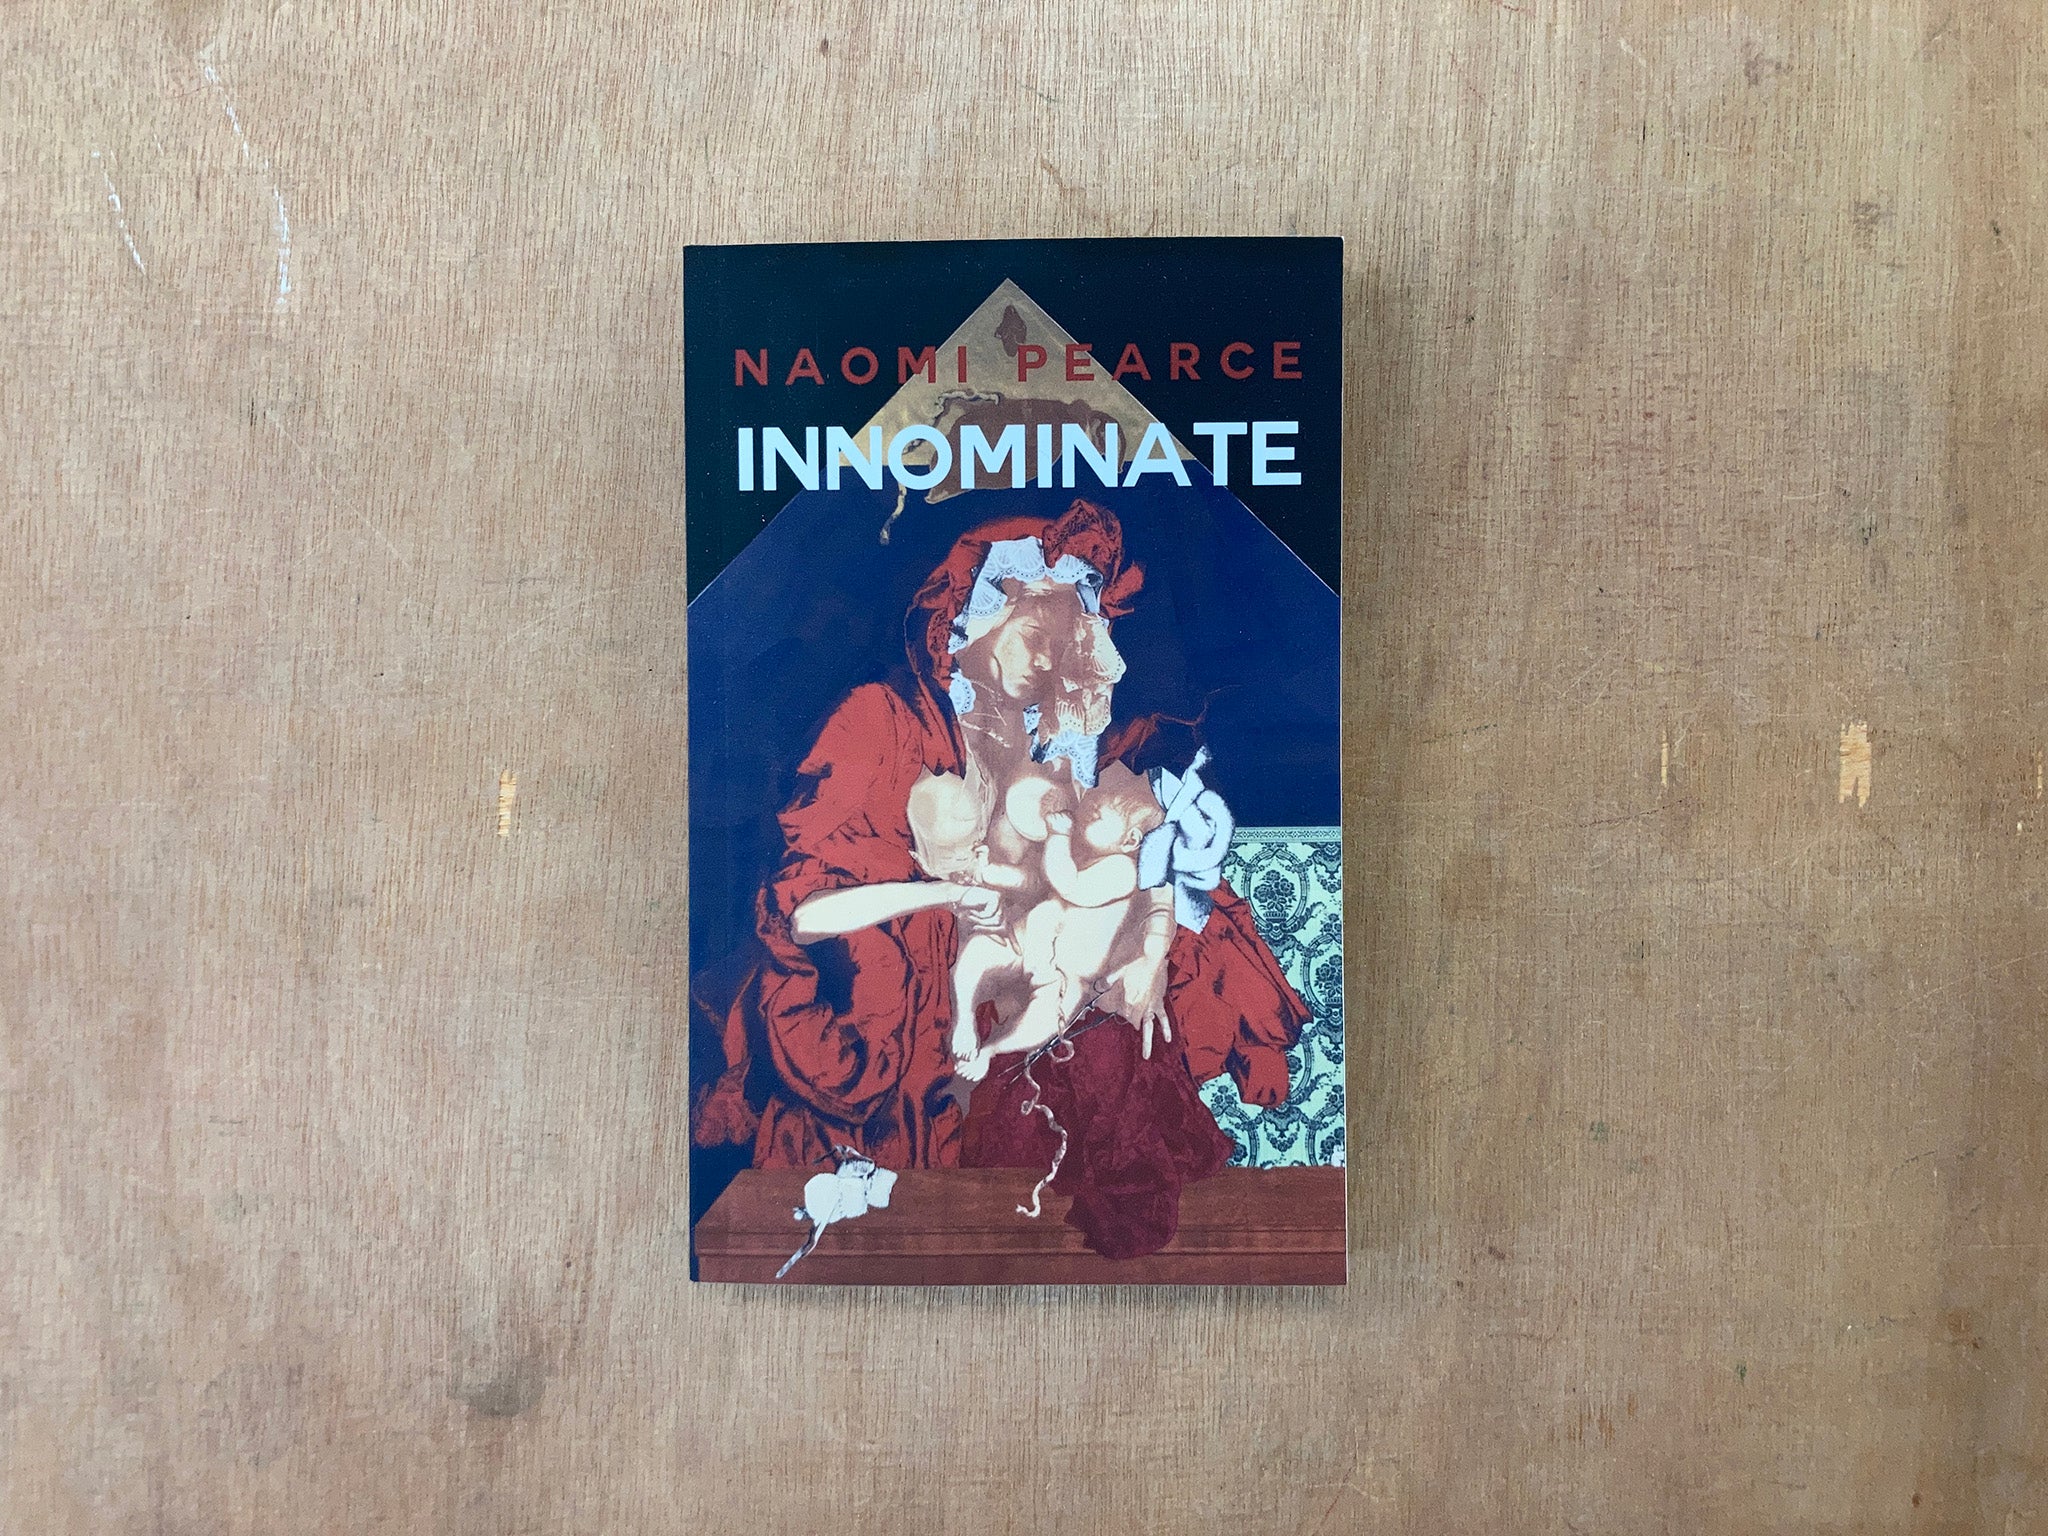 INNOMINATE by Naomi Pearce